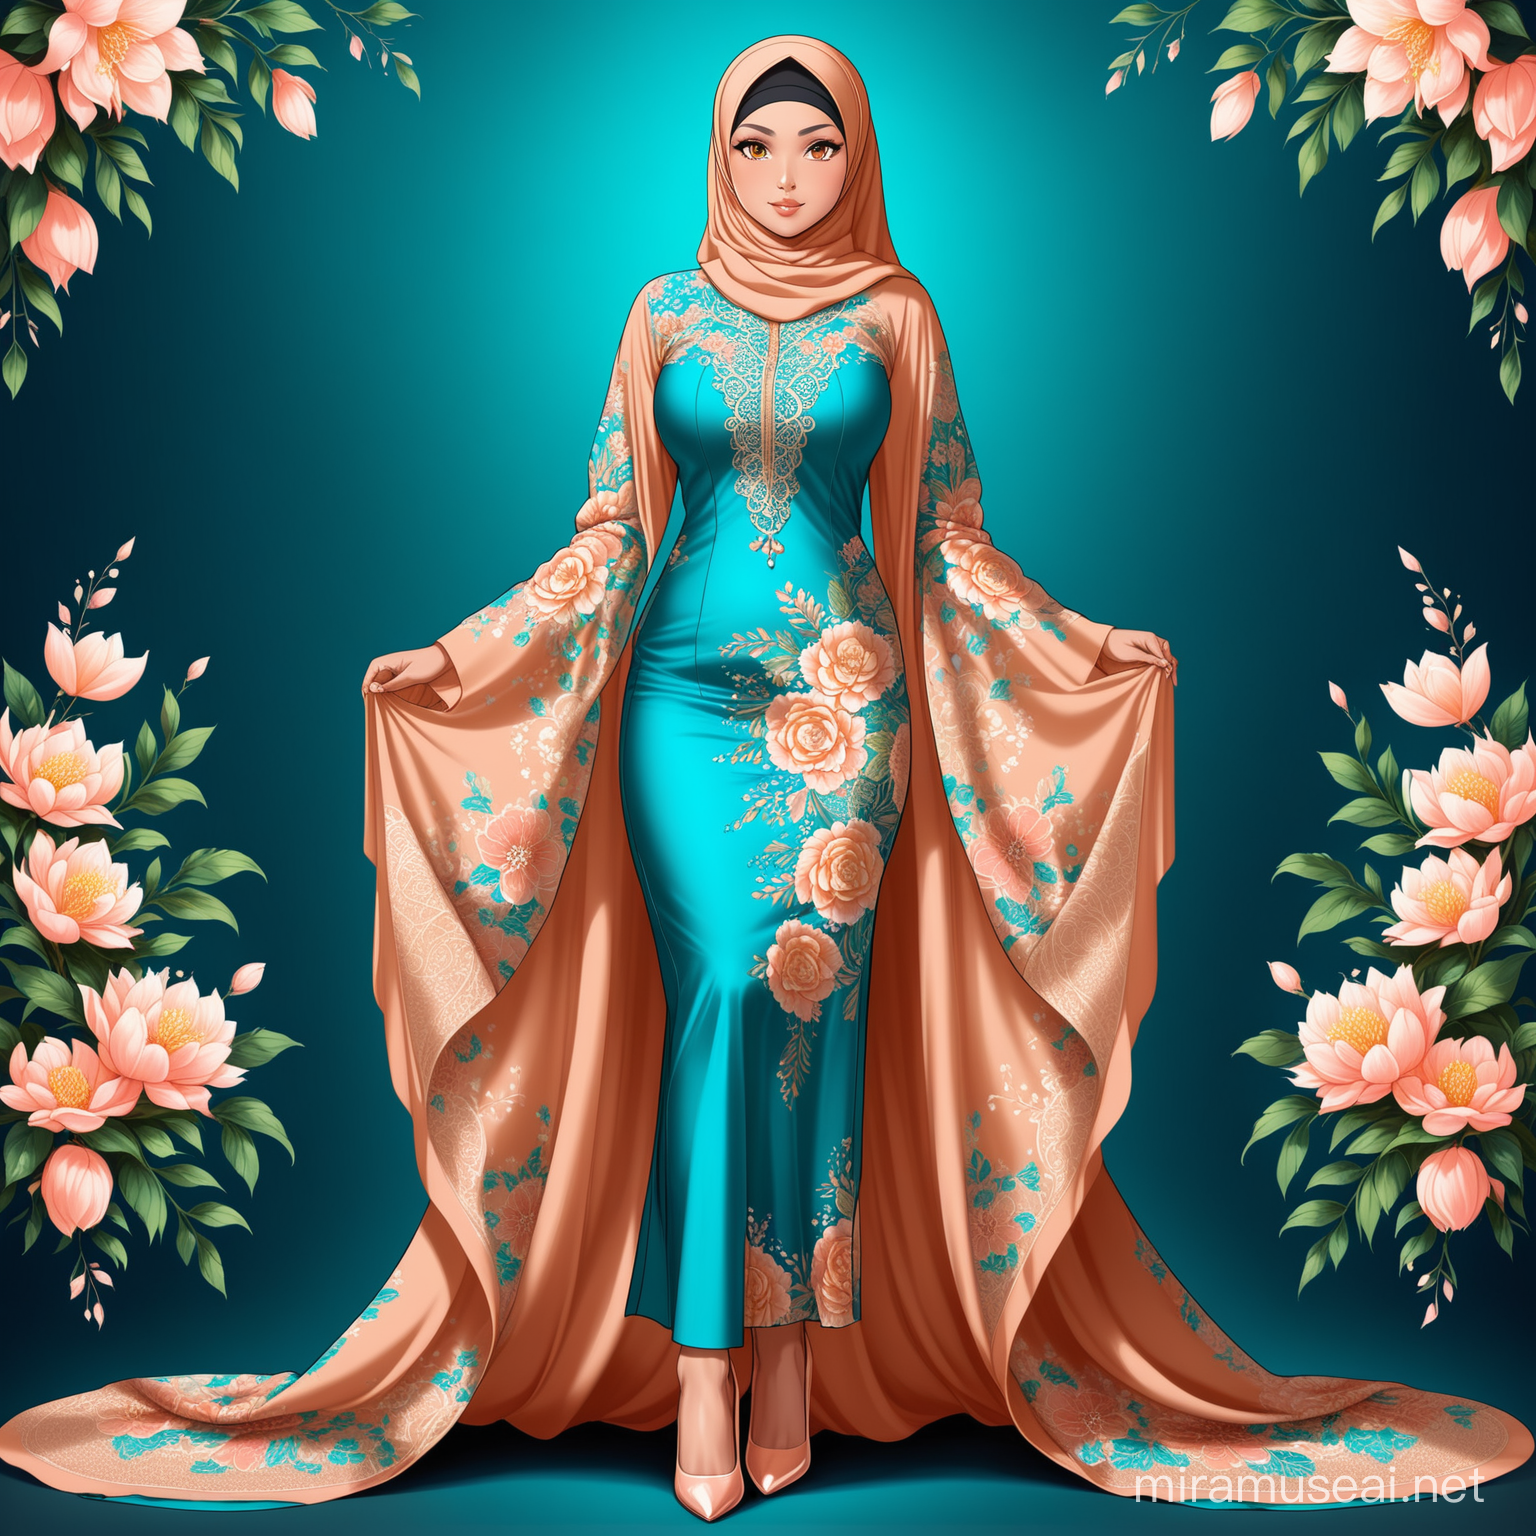 Elegant Malay Woman in Vibrant Sea Blue and Peach Kebaya Against a Professional Blue Background